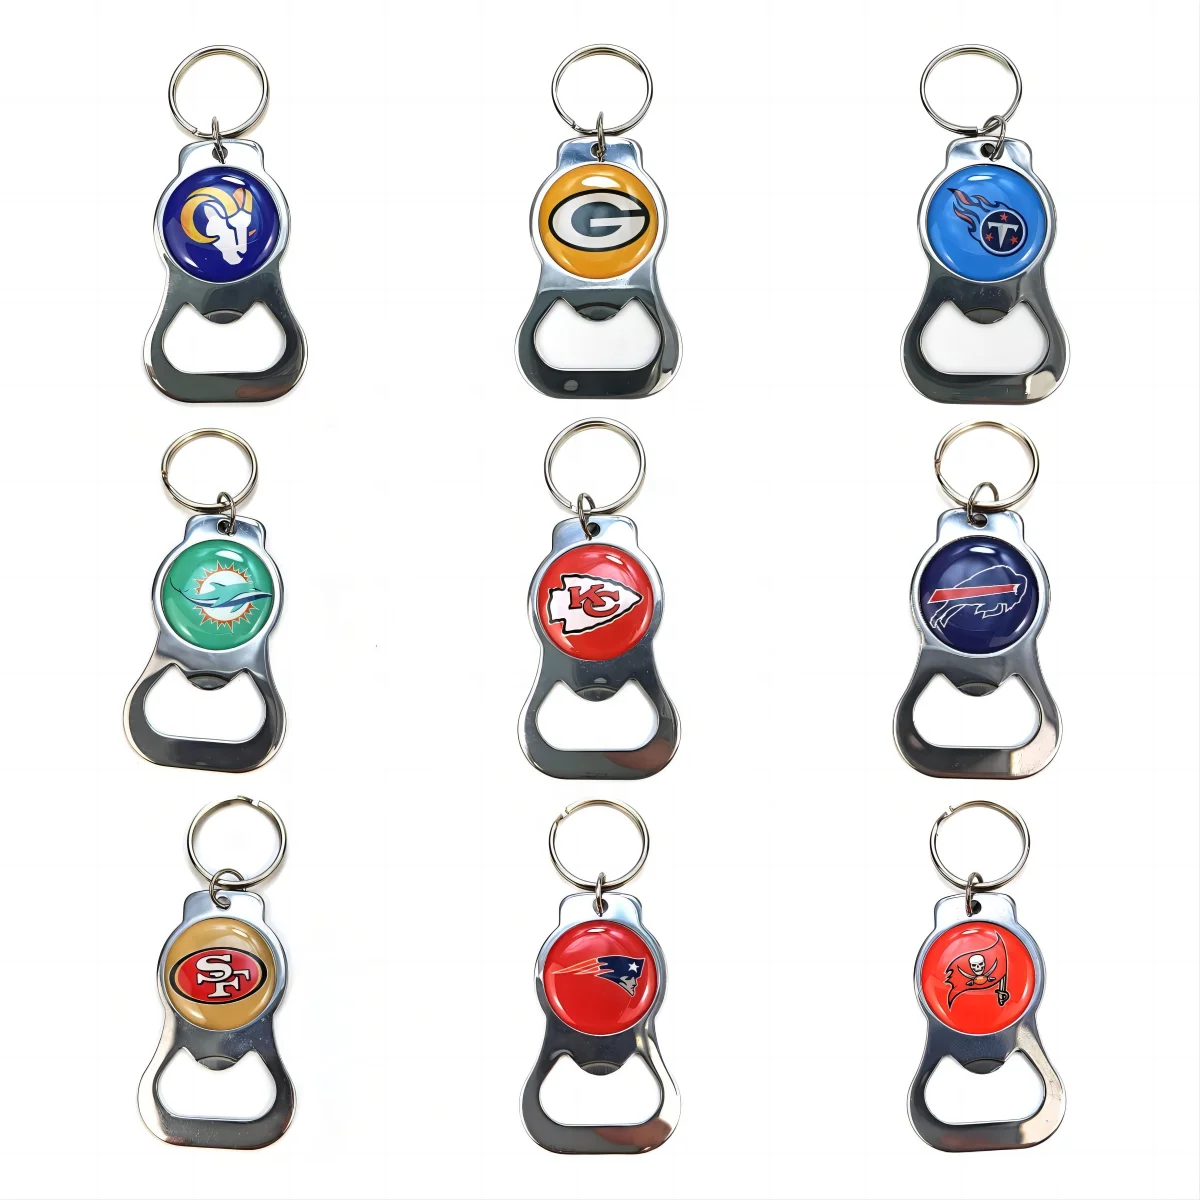 

Wholesale Promotional Souvenir Gift Metal NFL Bottle Opener Keychain For Football Teams